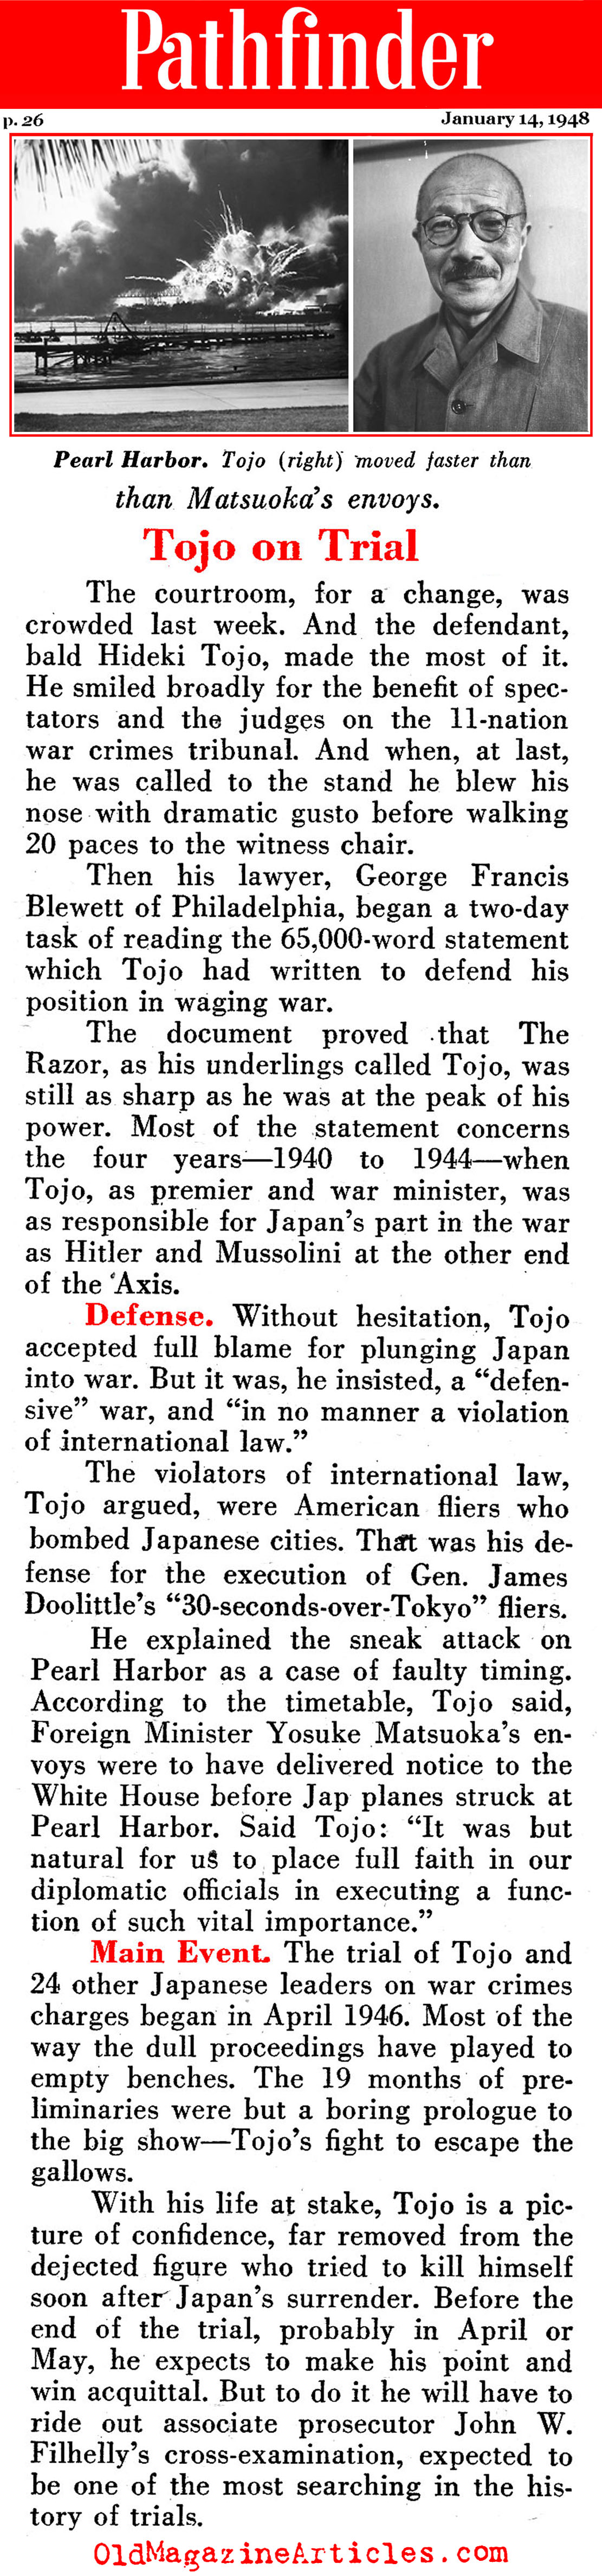 The Trial of Hideko Tojo (Pathfinder Magazine, 1945)